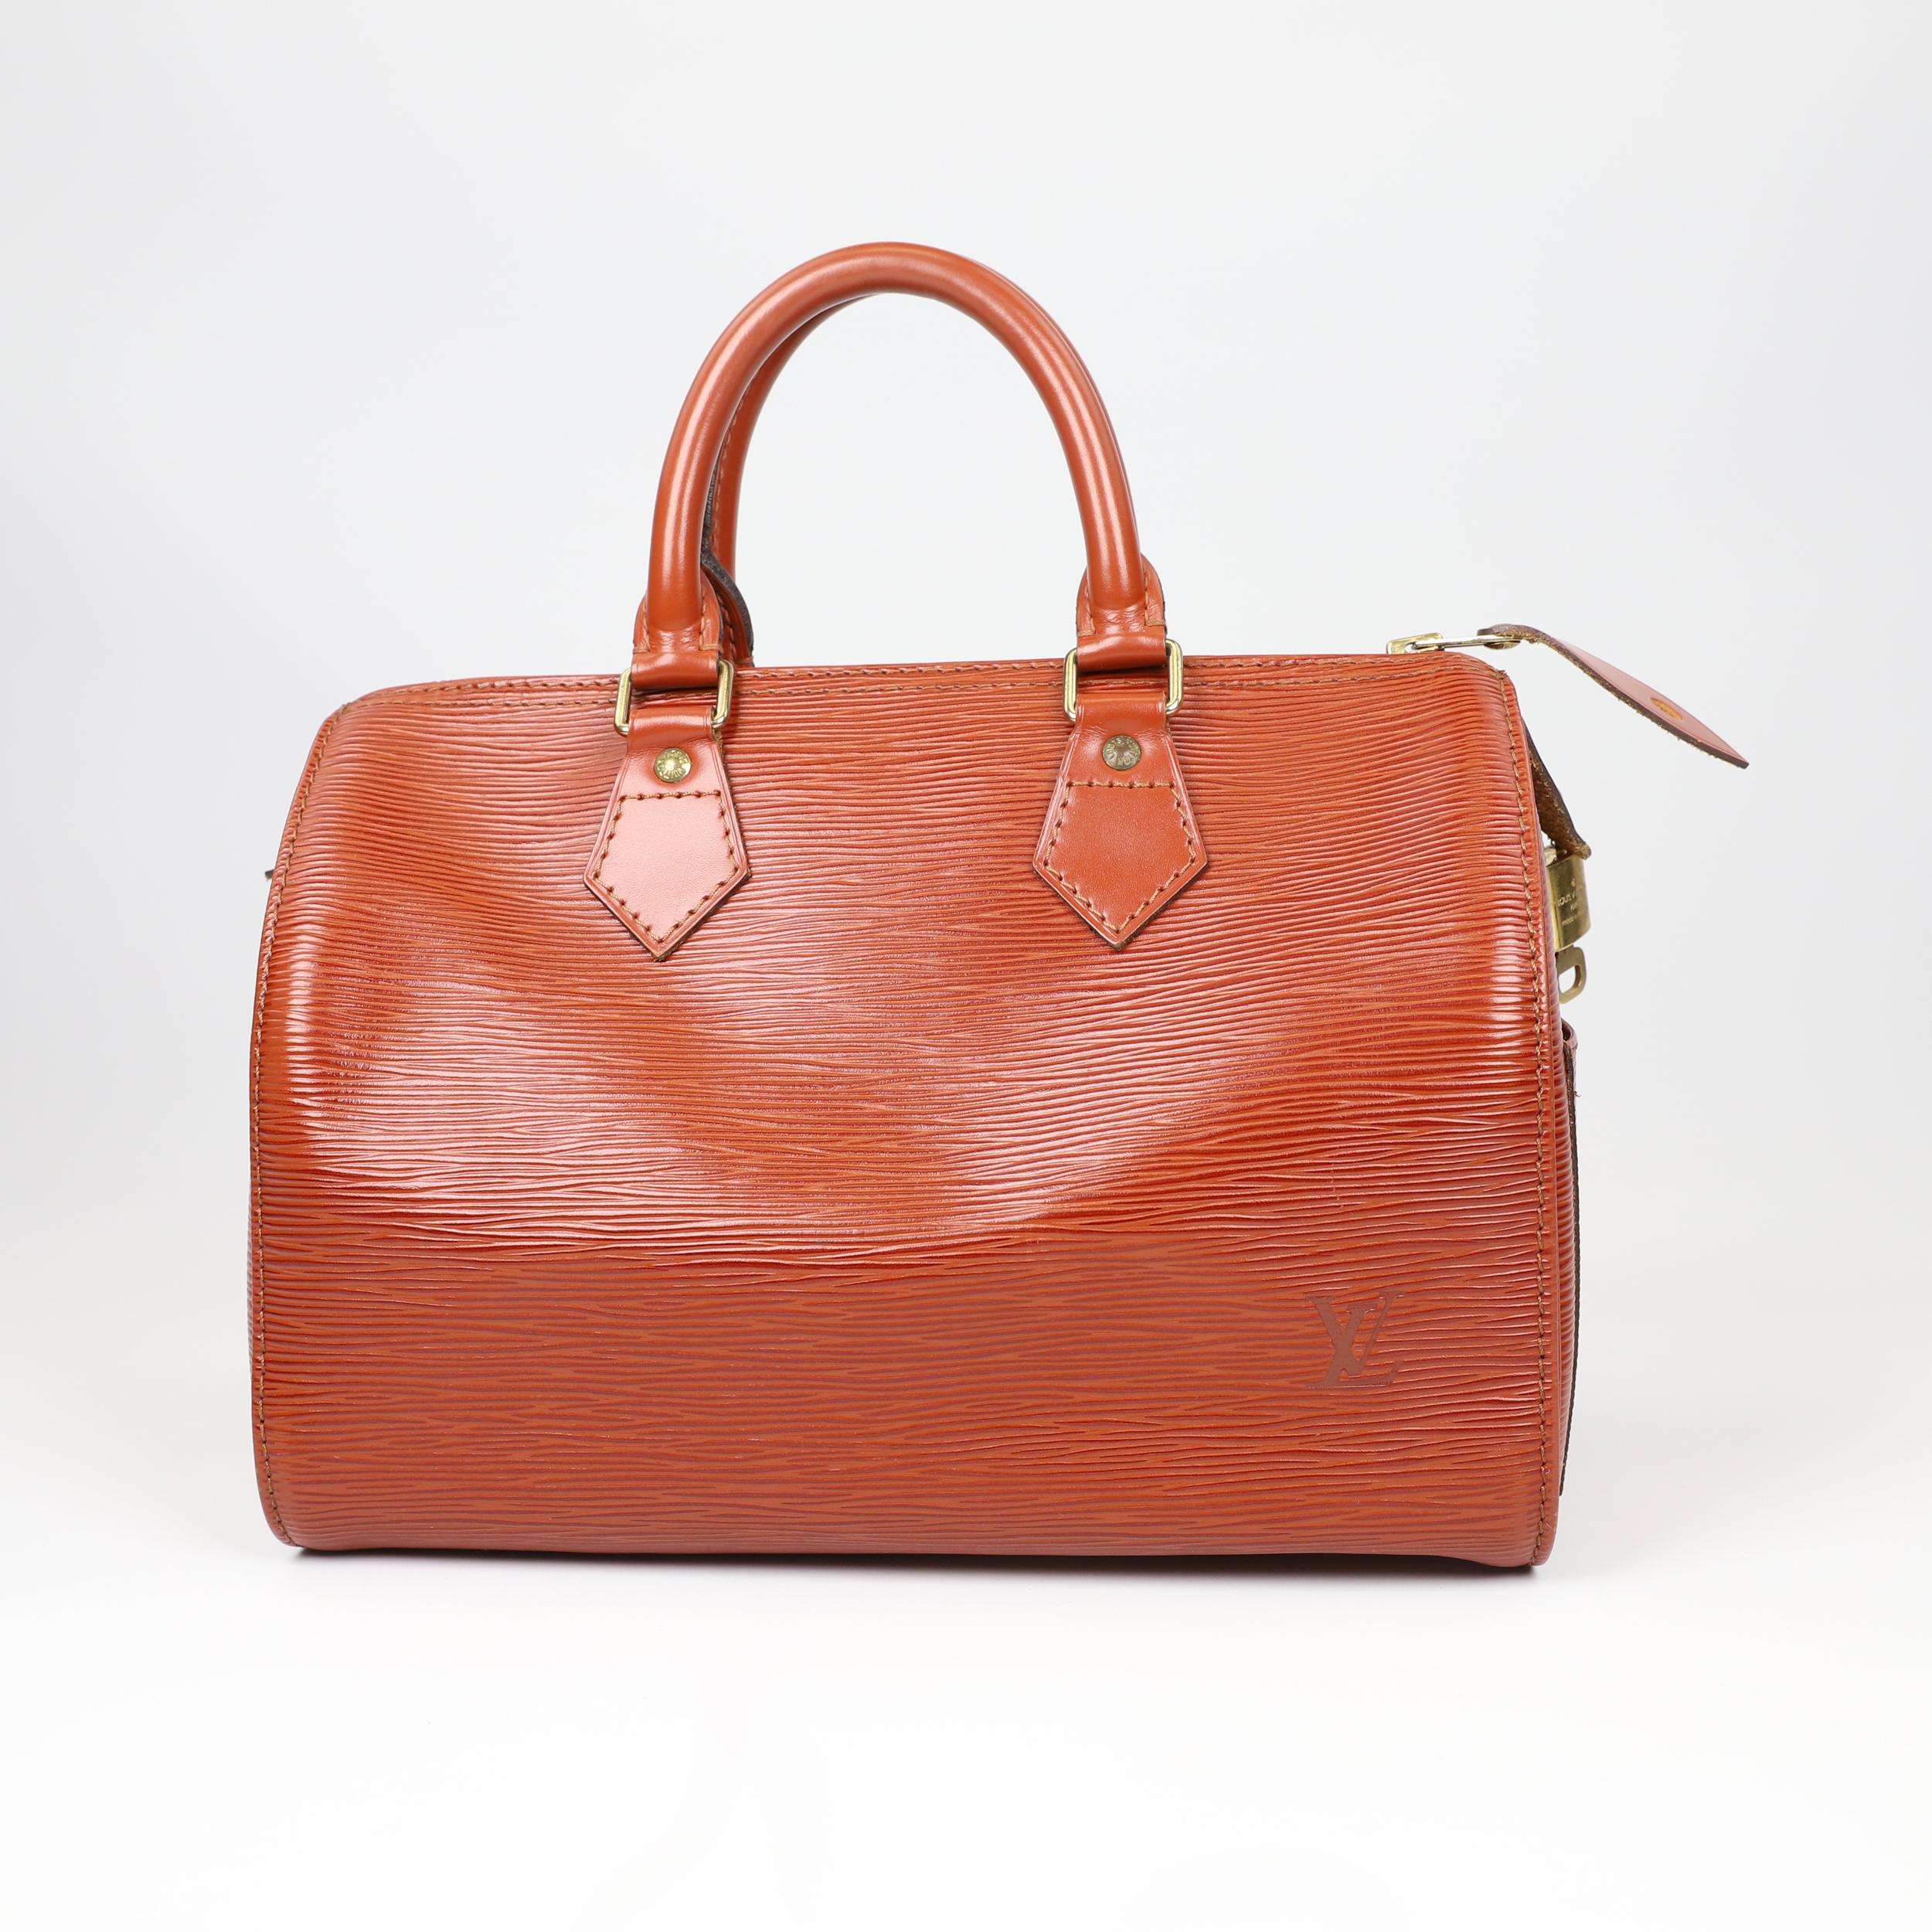 Louis Vuitton Speedy leather handbag 1